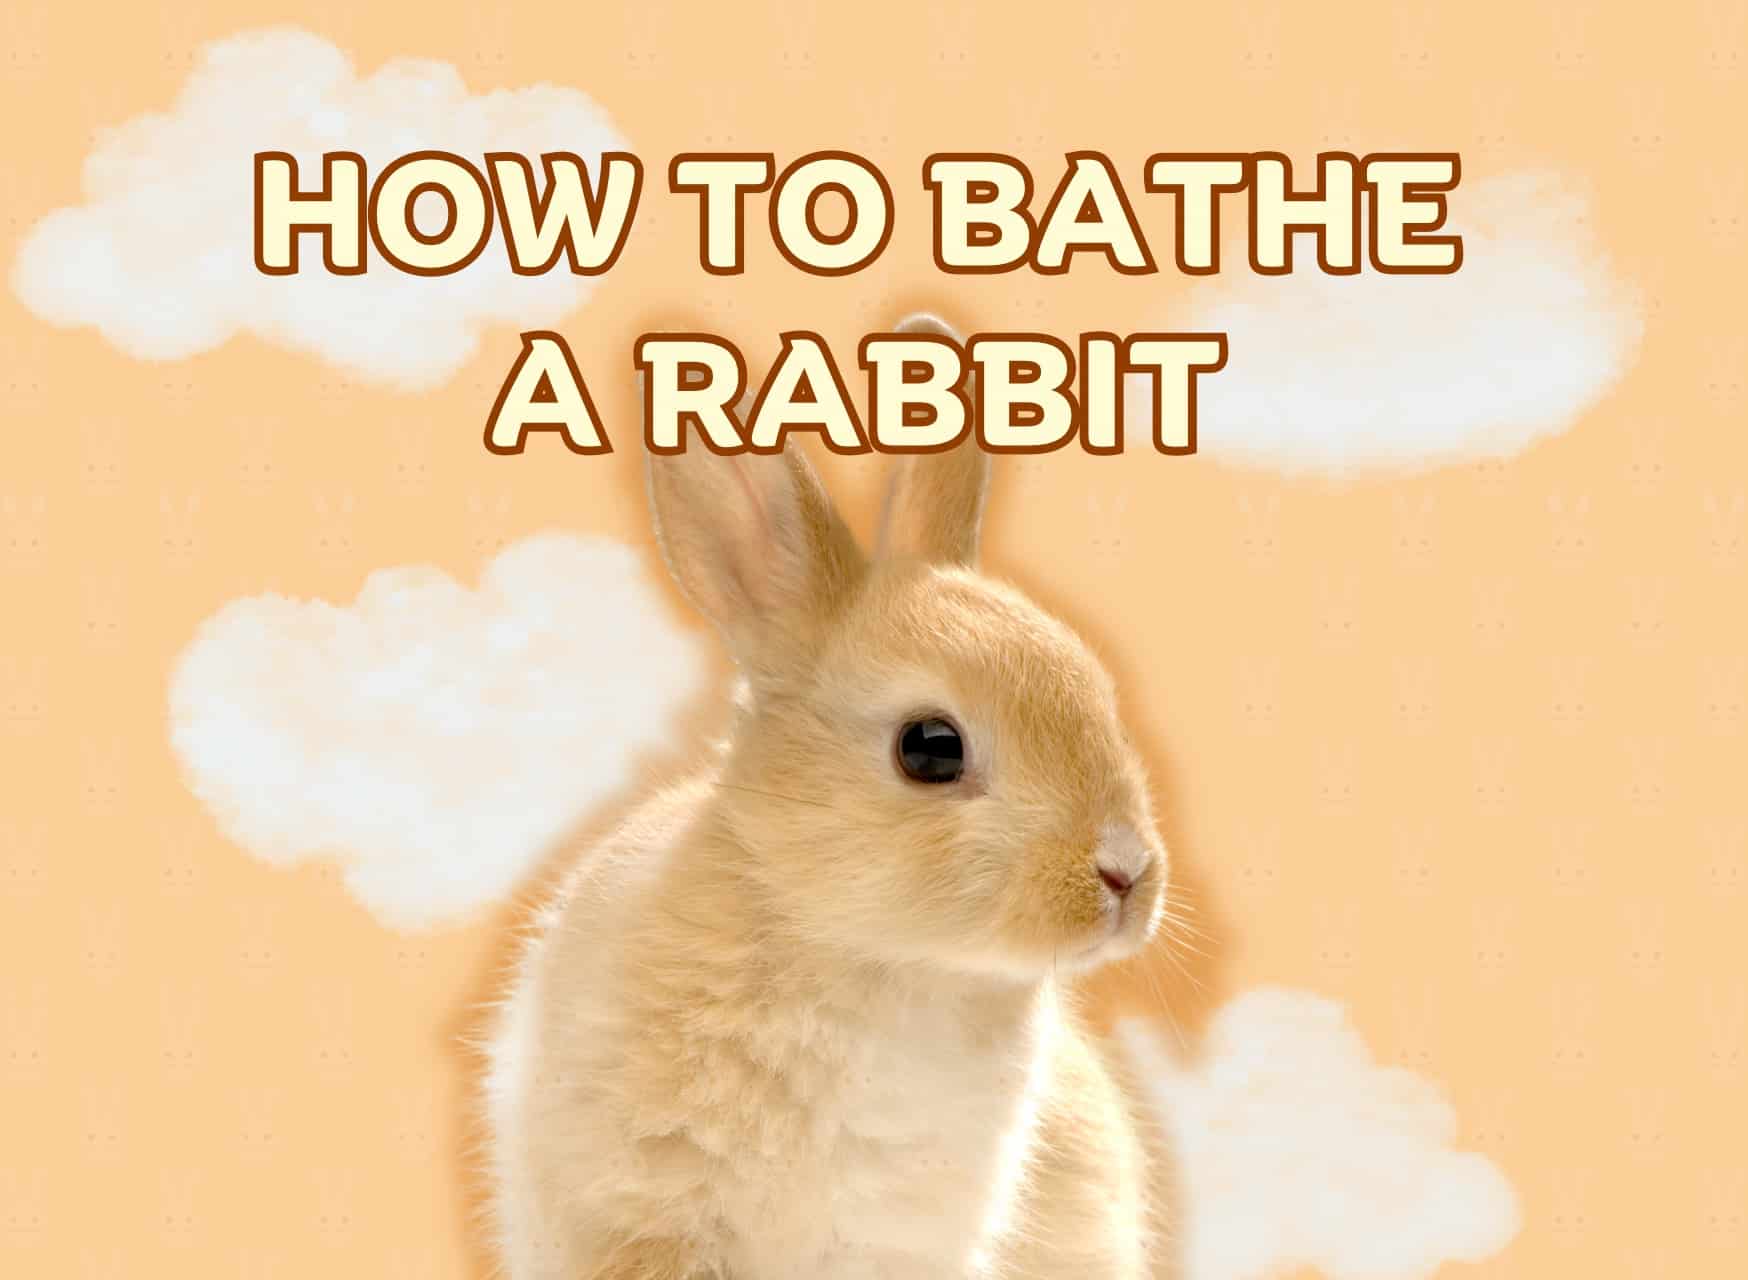 How to Bathe a Rabbit